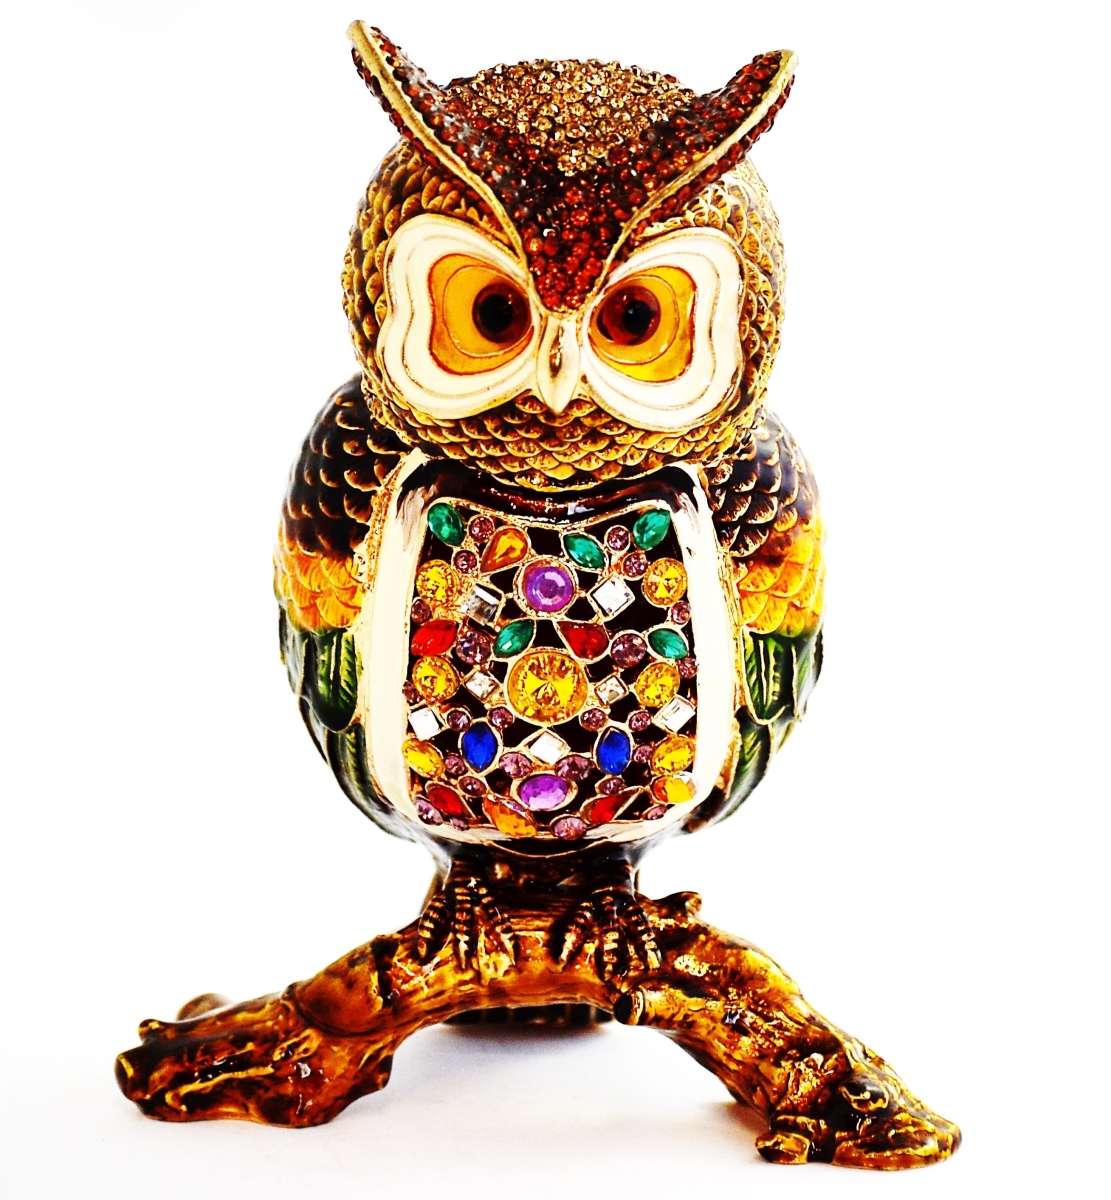 1013777 Big Owl On Branch Gold Plating Trinket Box - Swarovski Crystals & Enamel